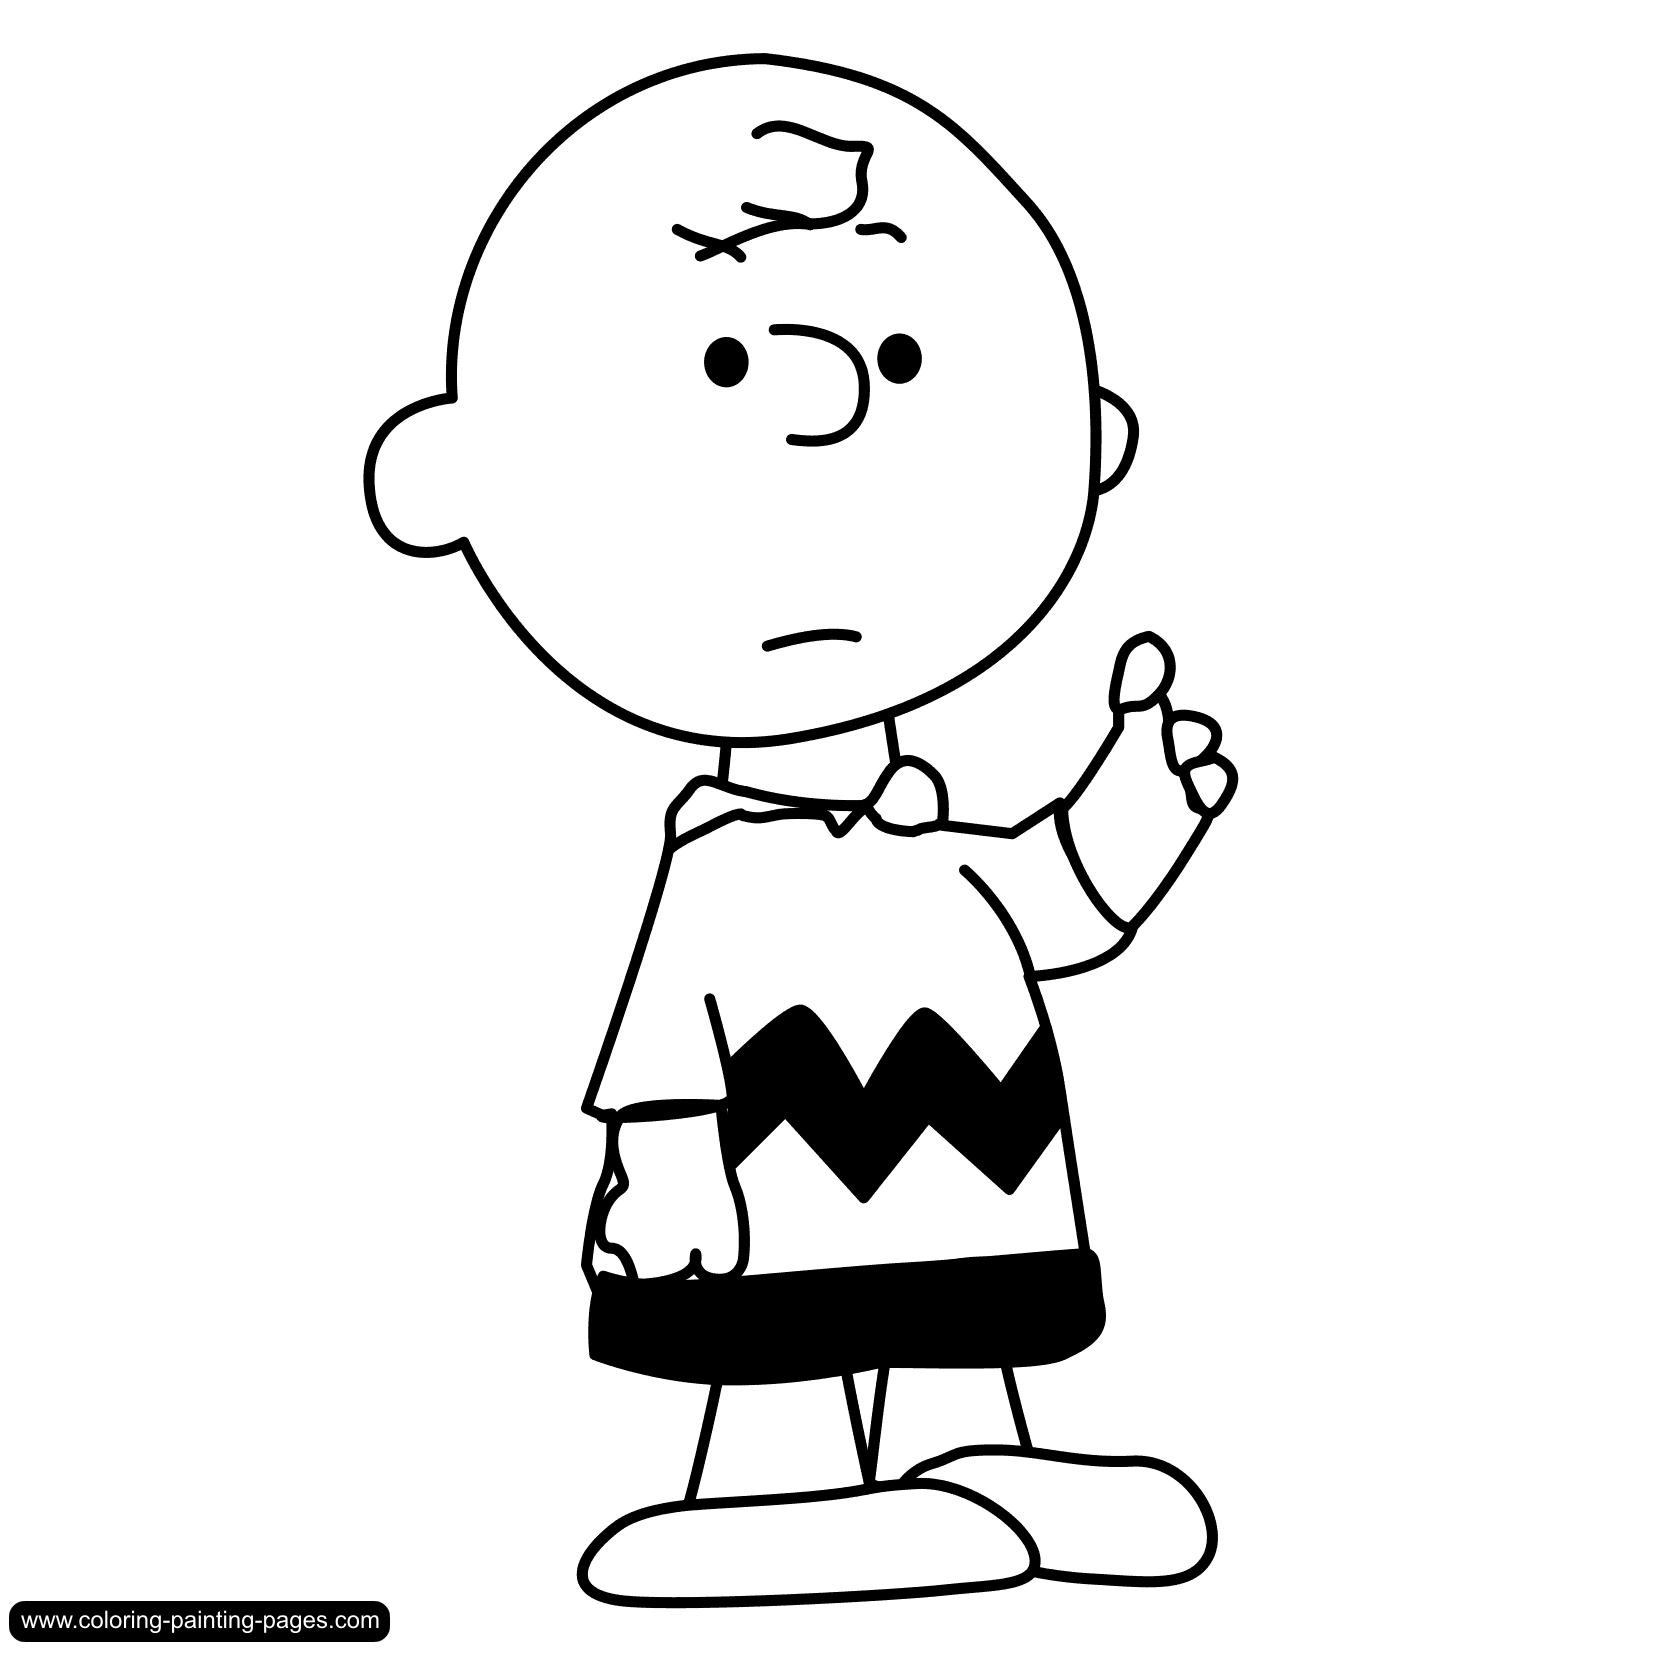 Tags: Charlie Brown Cartoon c